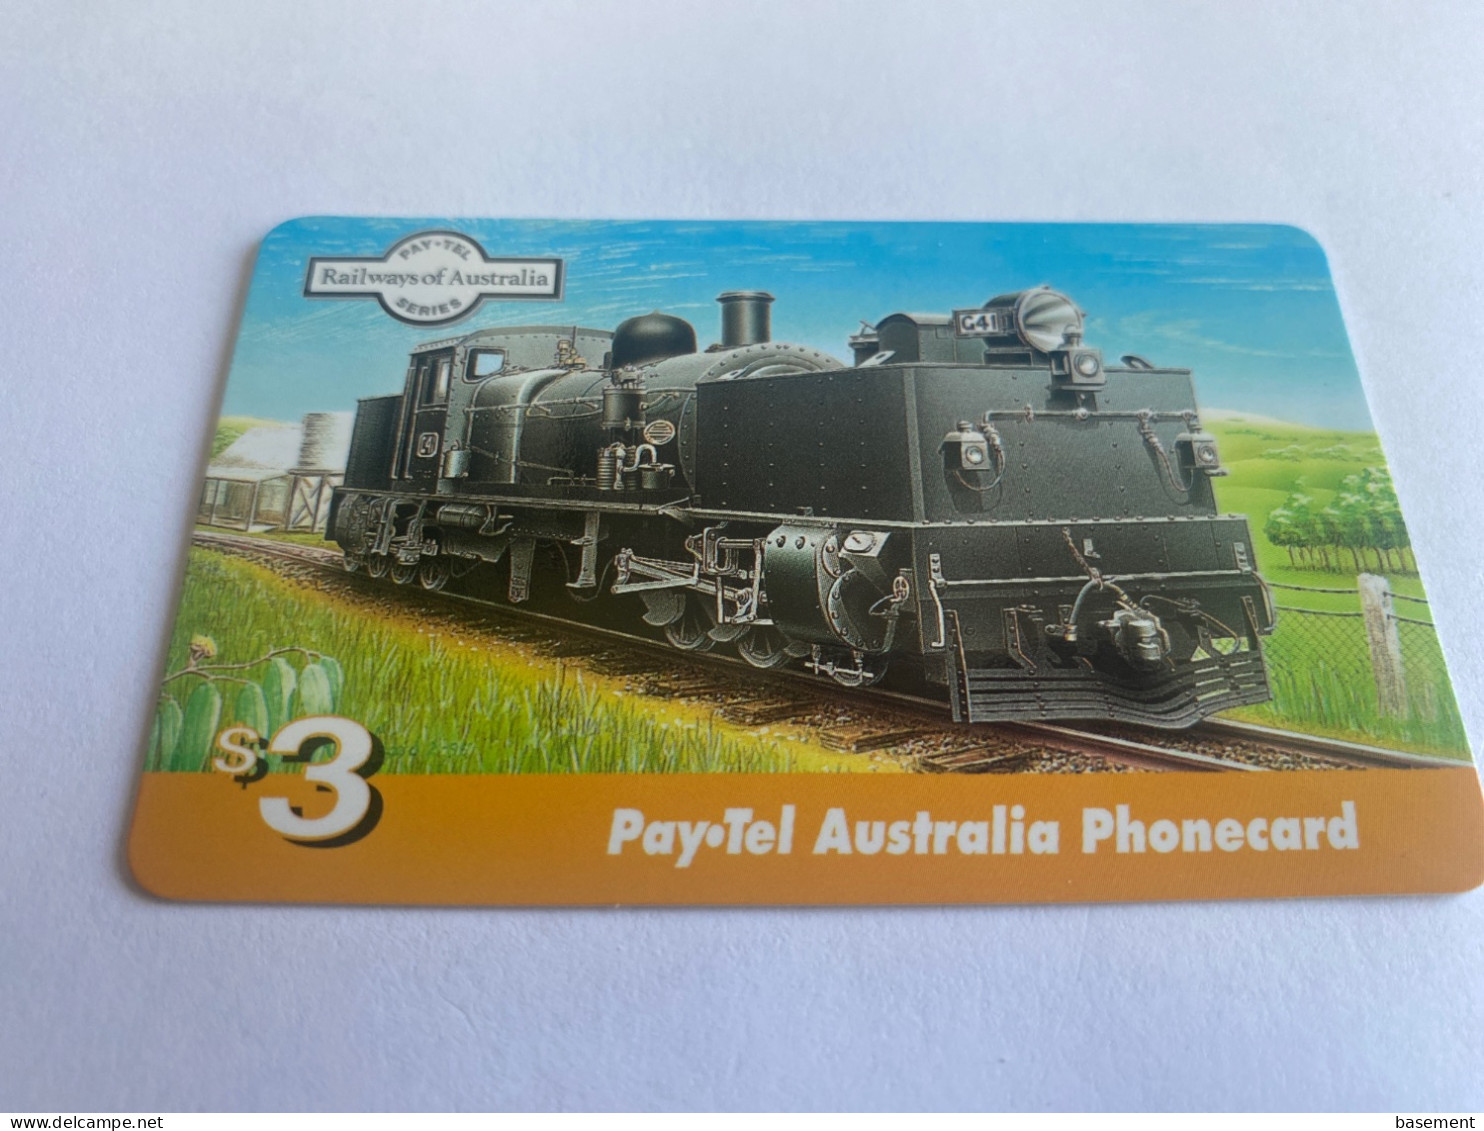 1:044 - Australia Pay Tel Railways Of Australia Train - Australien